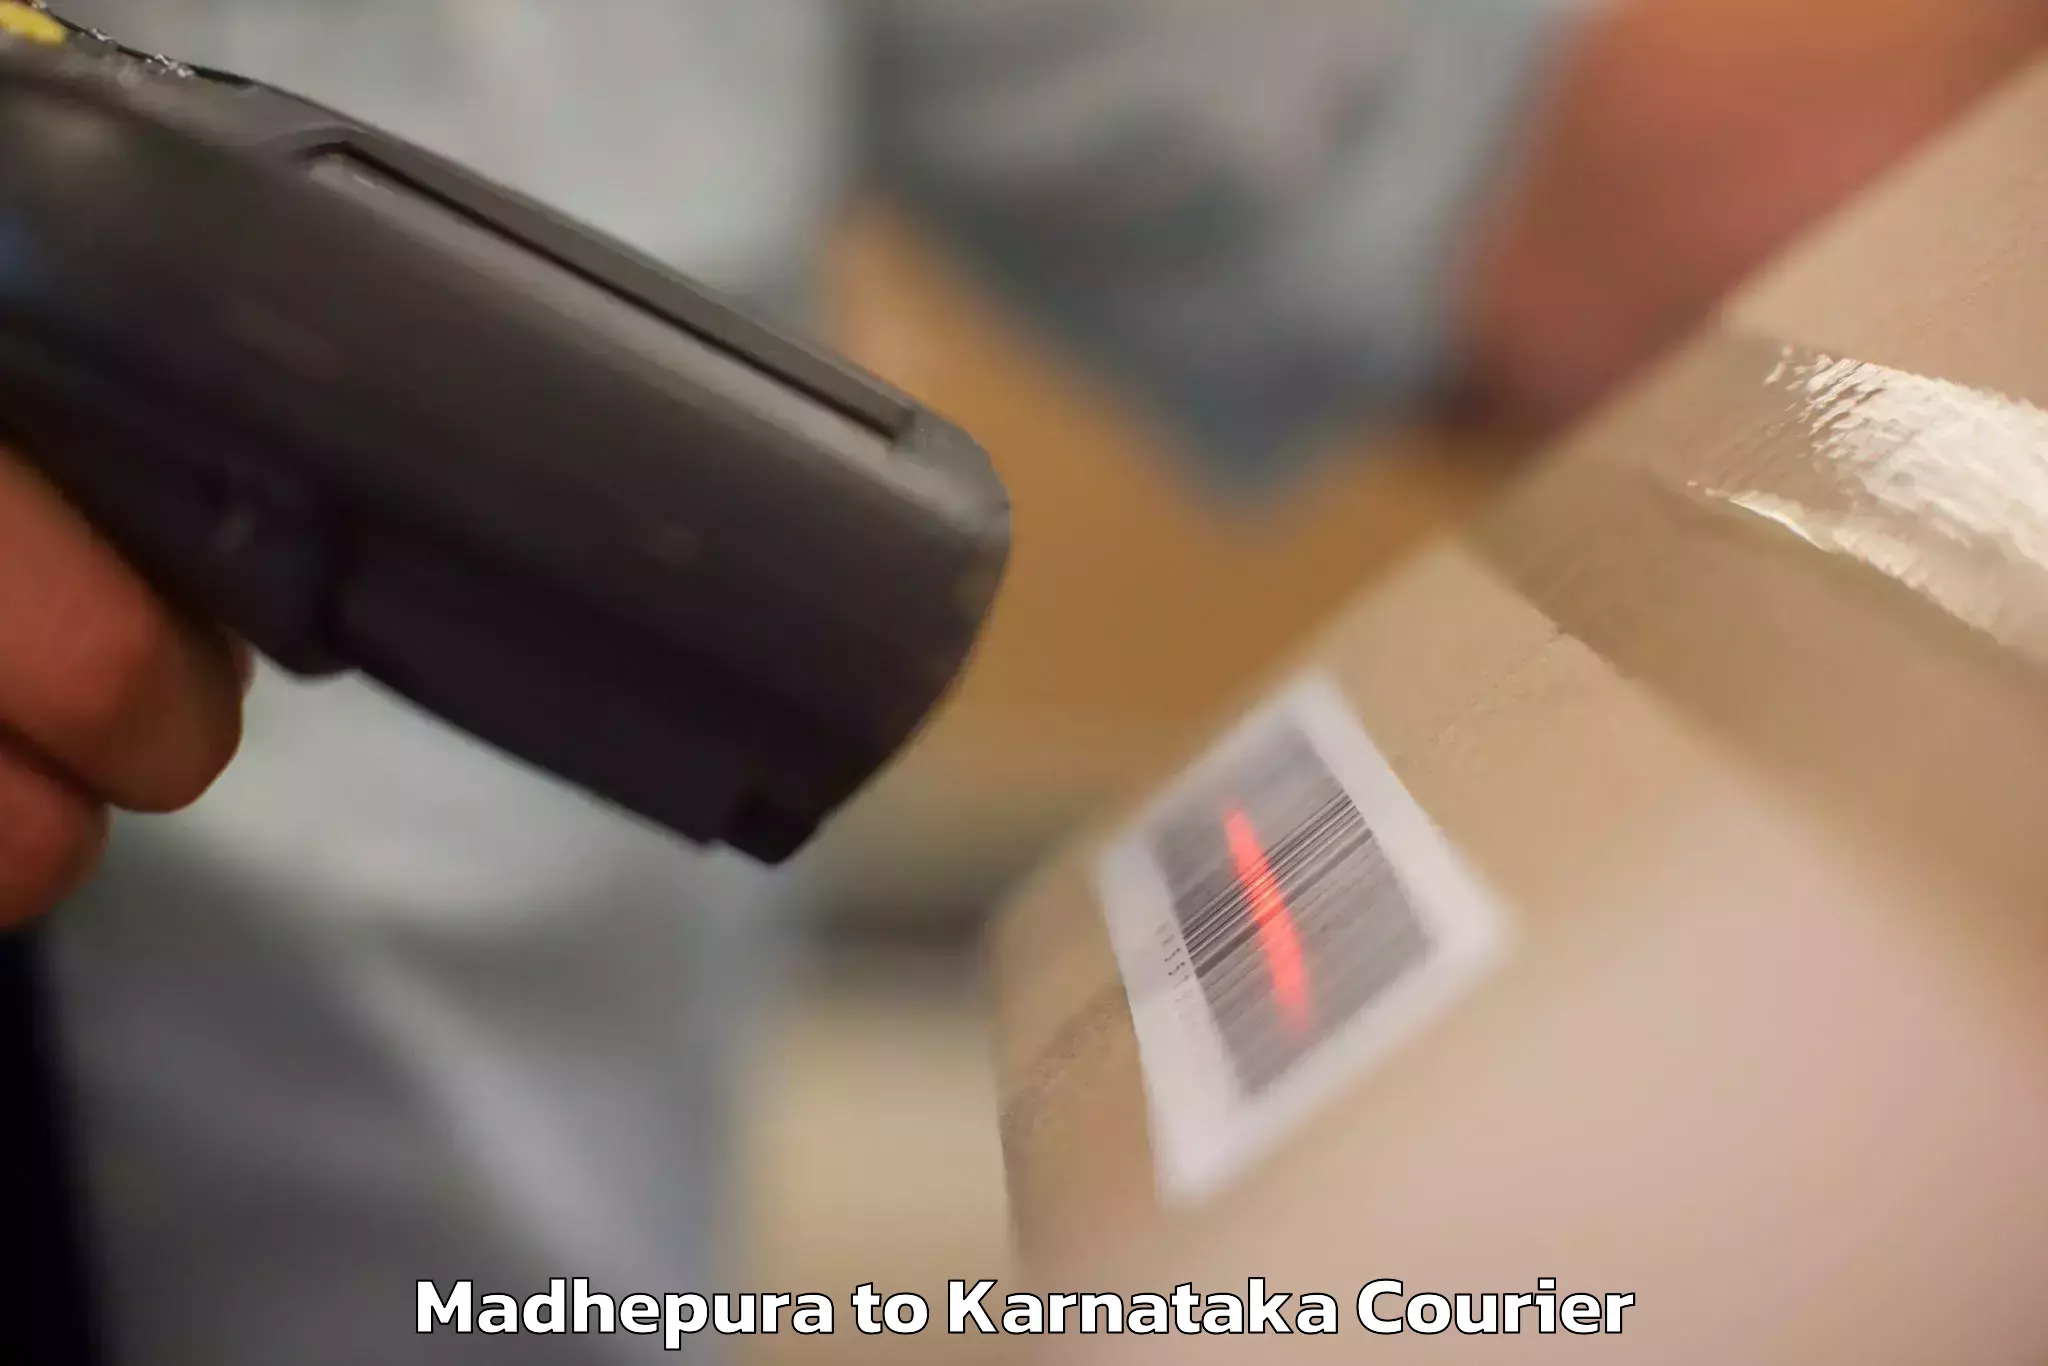 Personal effects shipping in Madhepura to Dharmasthala